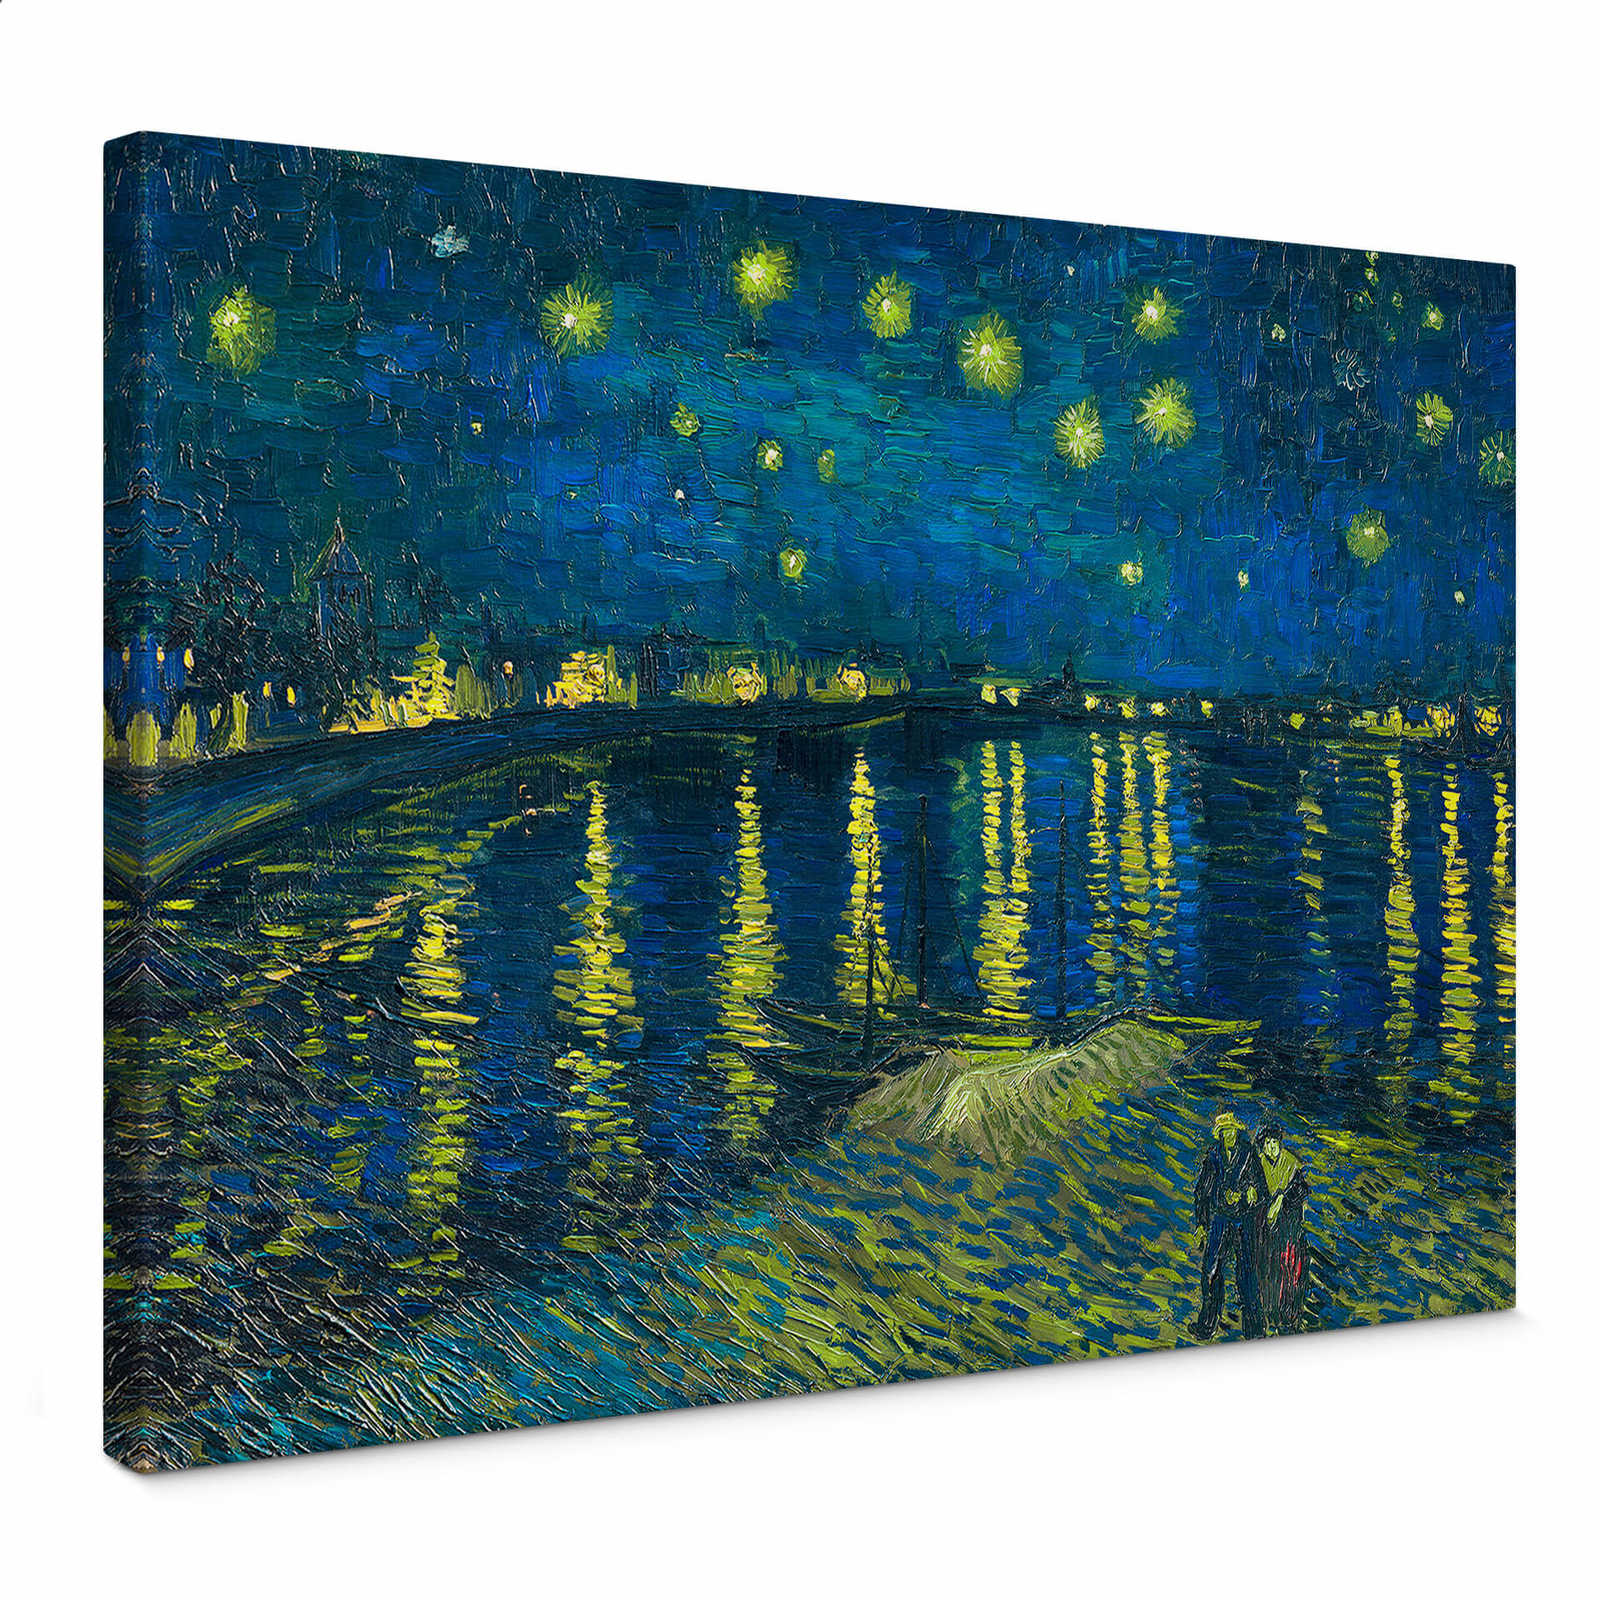         Canvas print "Starry night" by van Gogh – blue, yellow
    